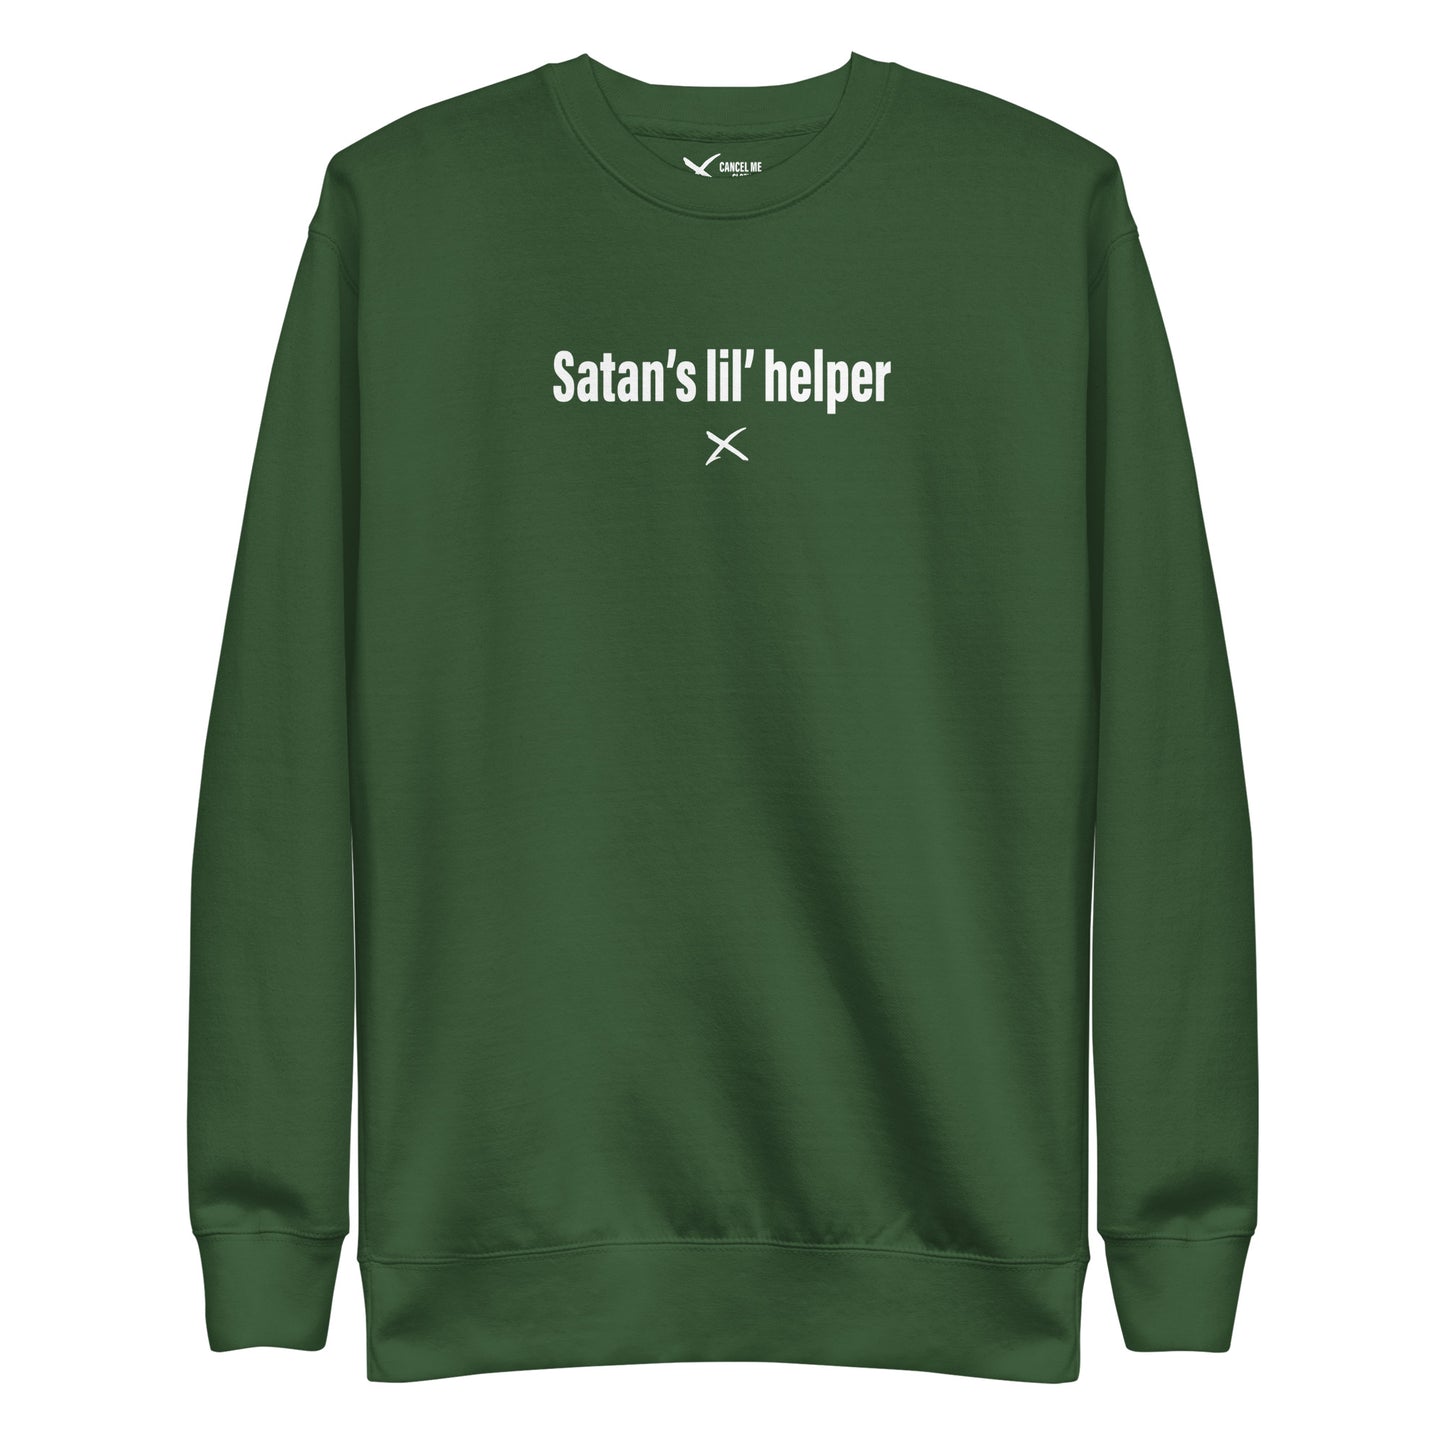 Satan's lil' helper - Sweatshirt